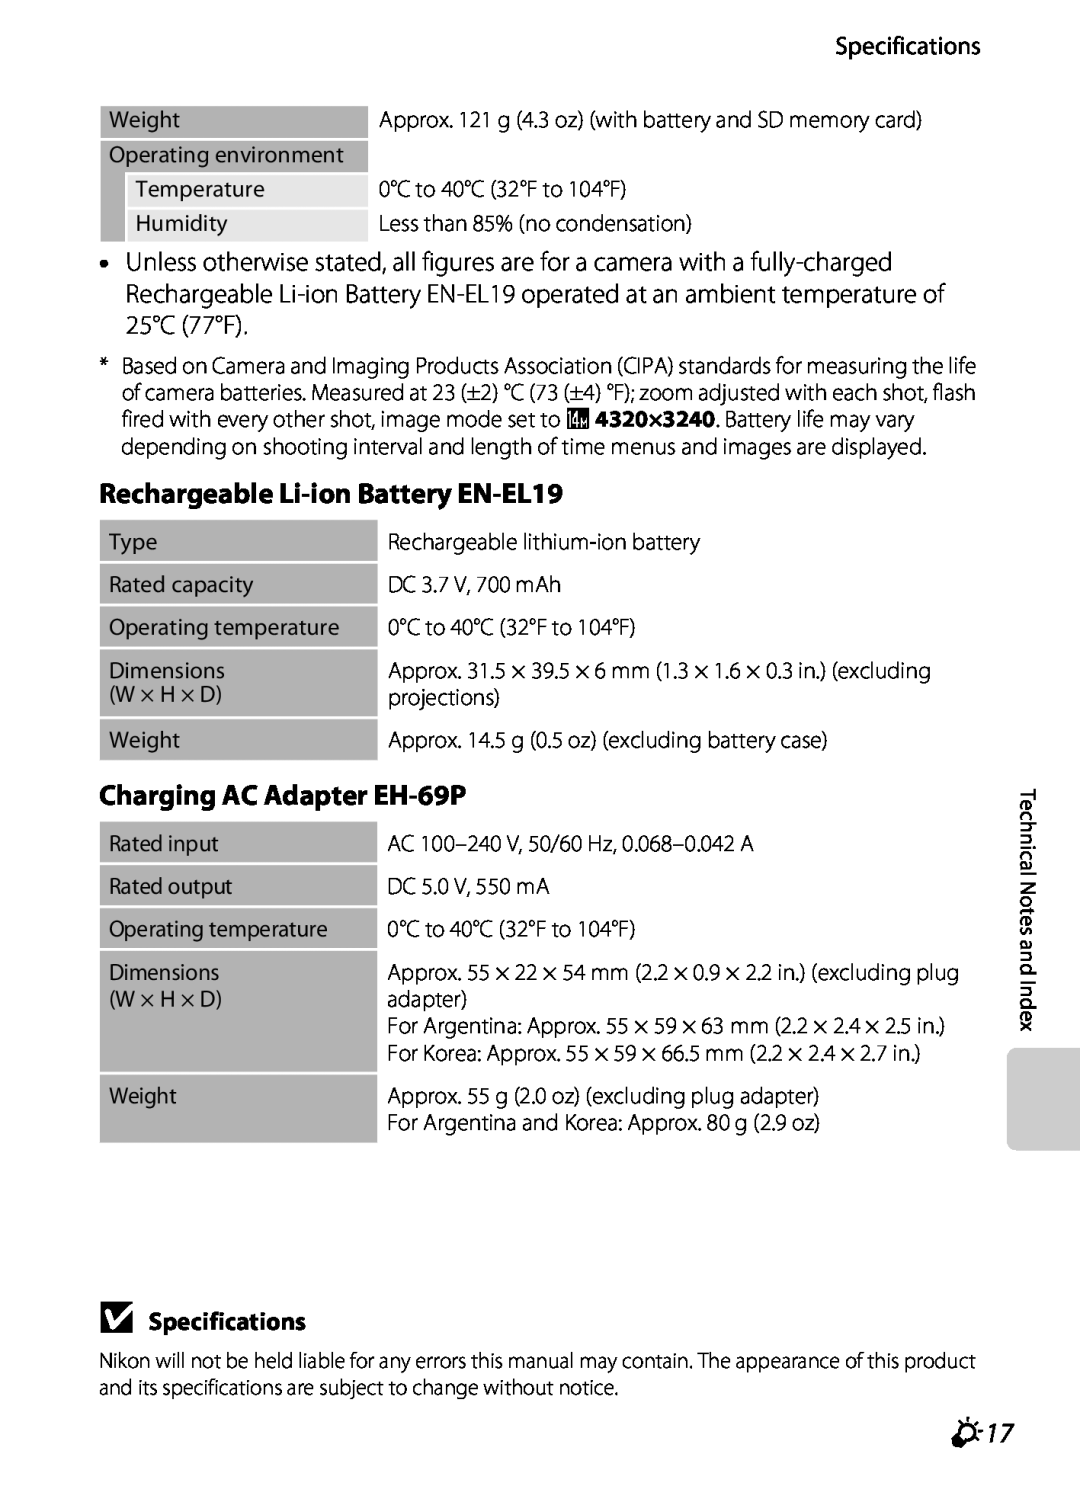 Nikon S2600 manual Rechargeable Li-ion Battery EN-EL19, Charging AC Adapter EH-69P, B Specifications 